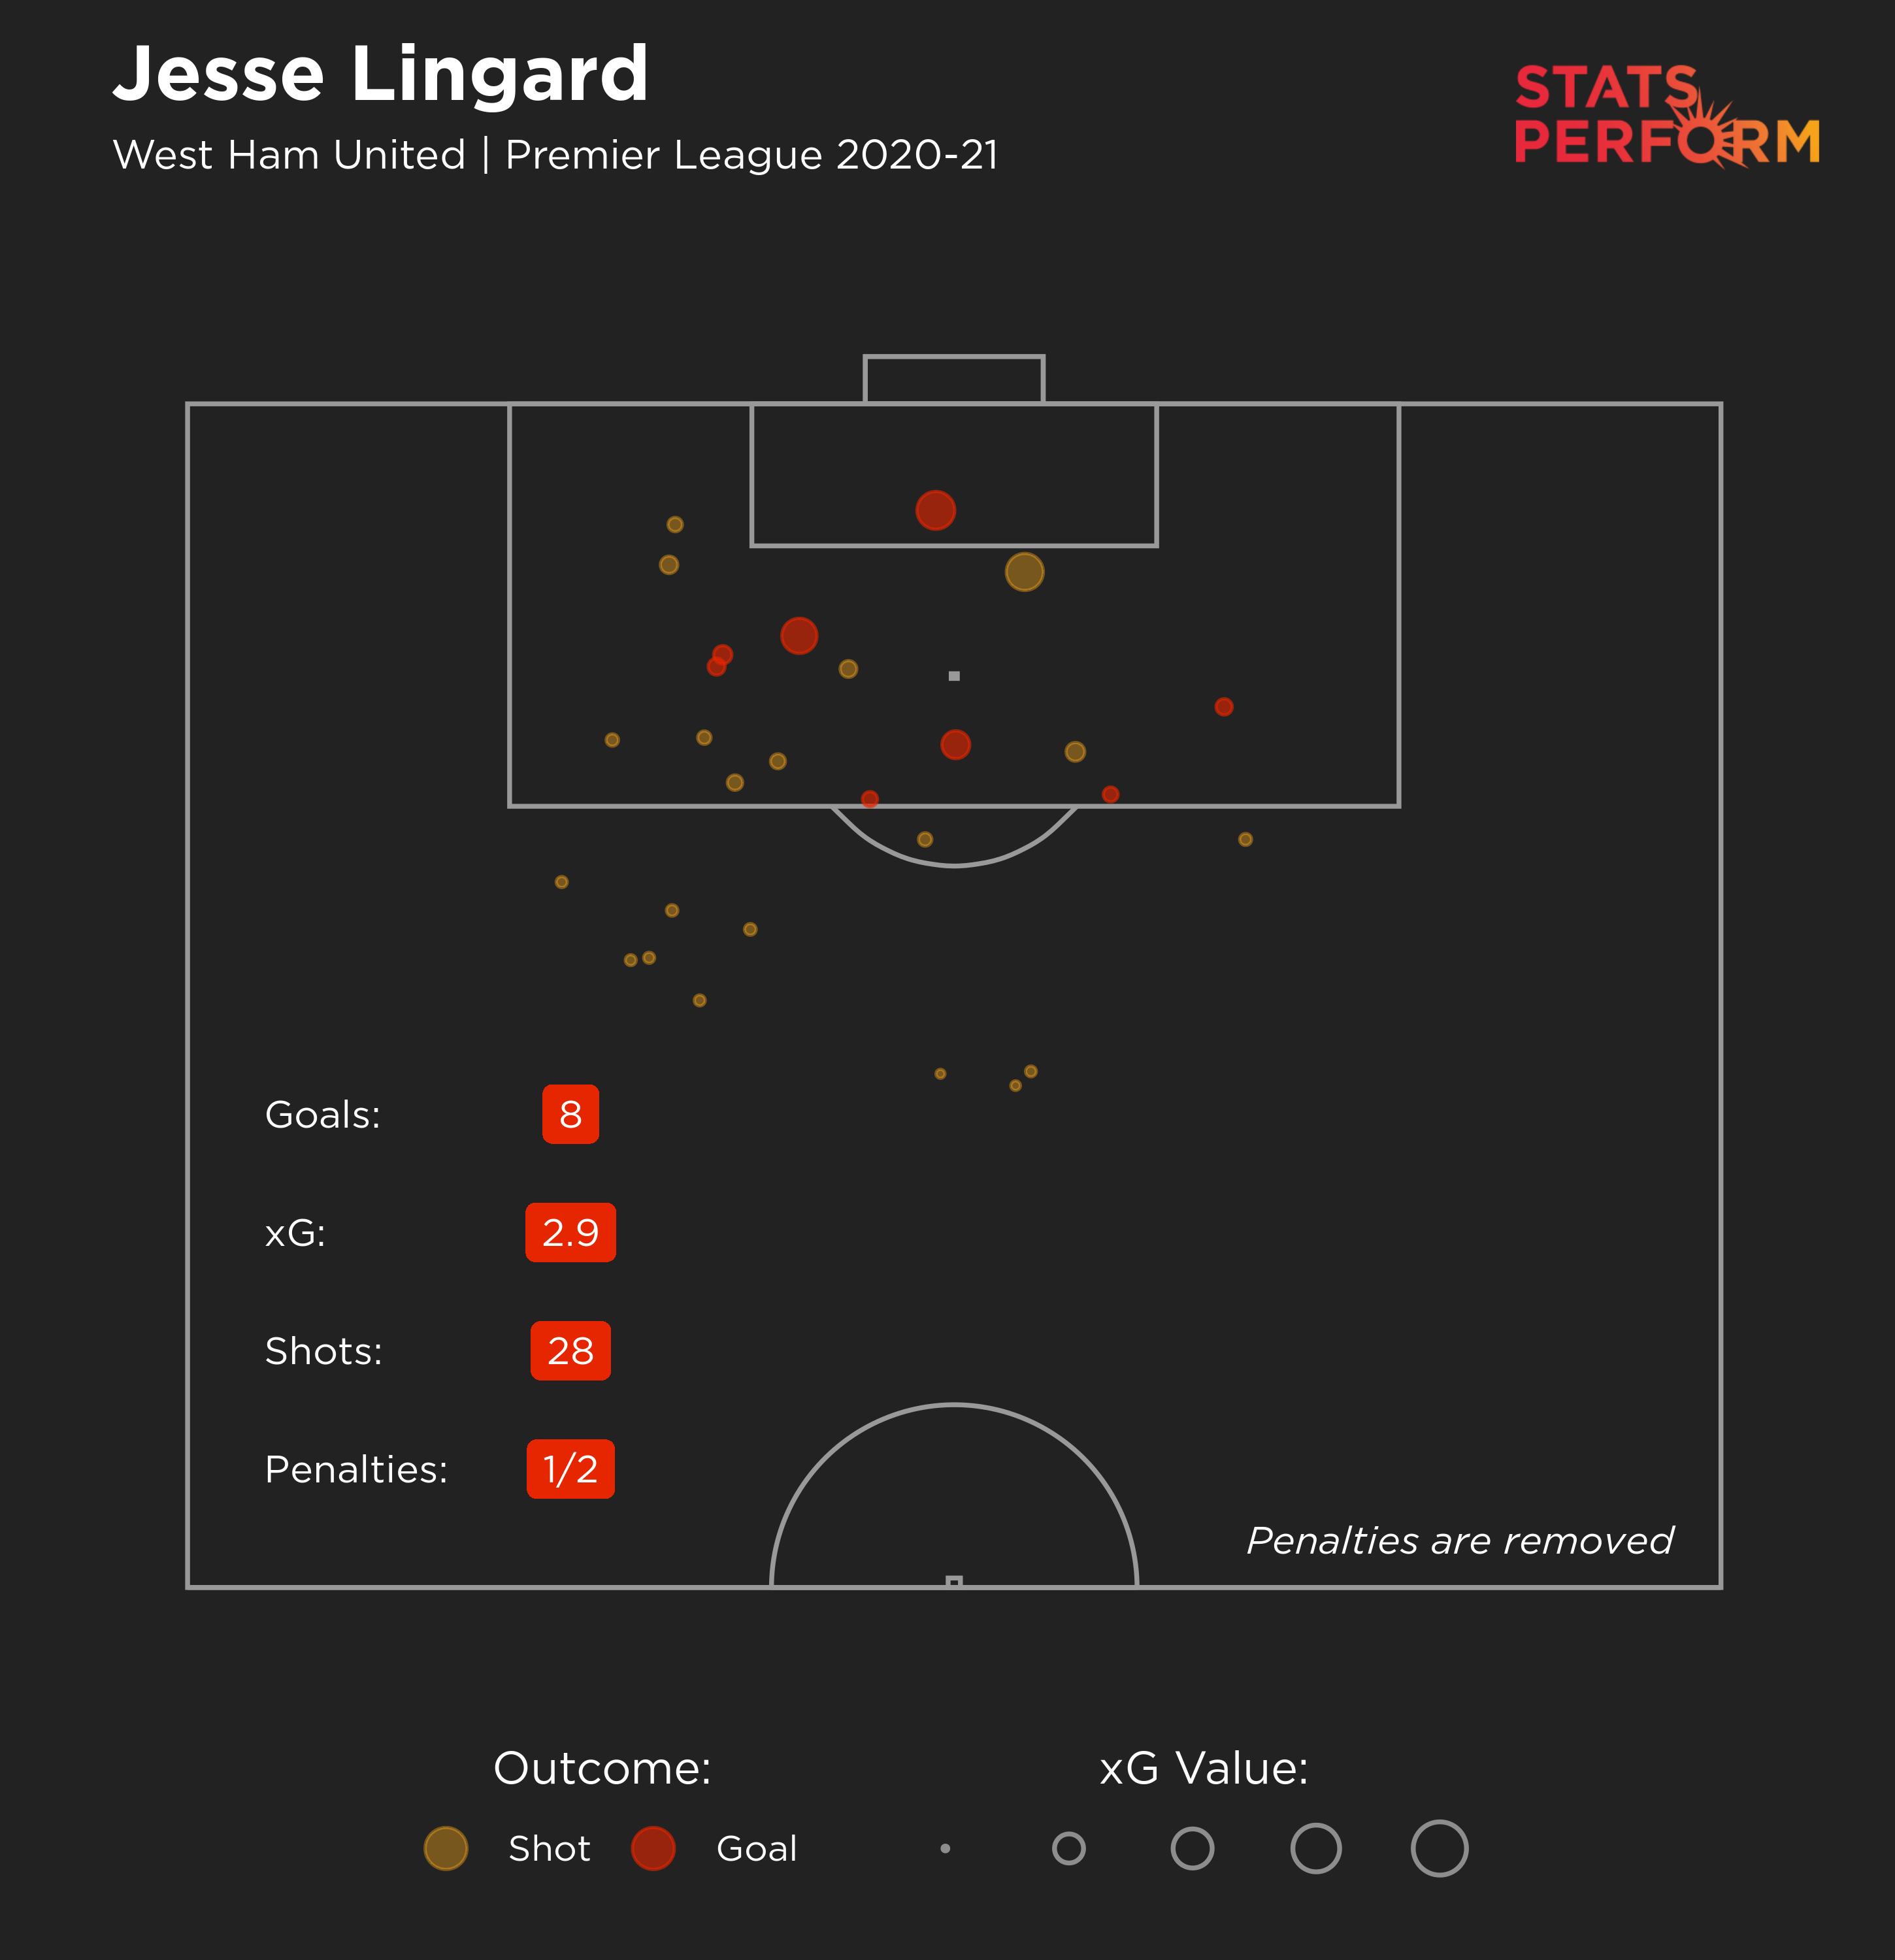 Jesse Lingard for West Ham this season